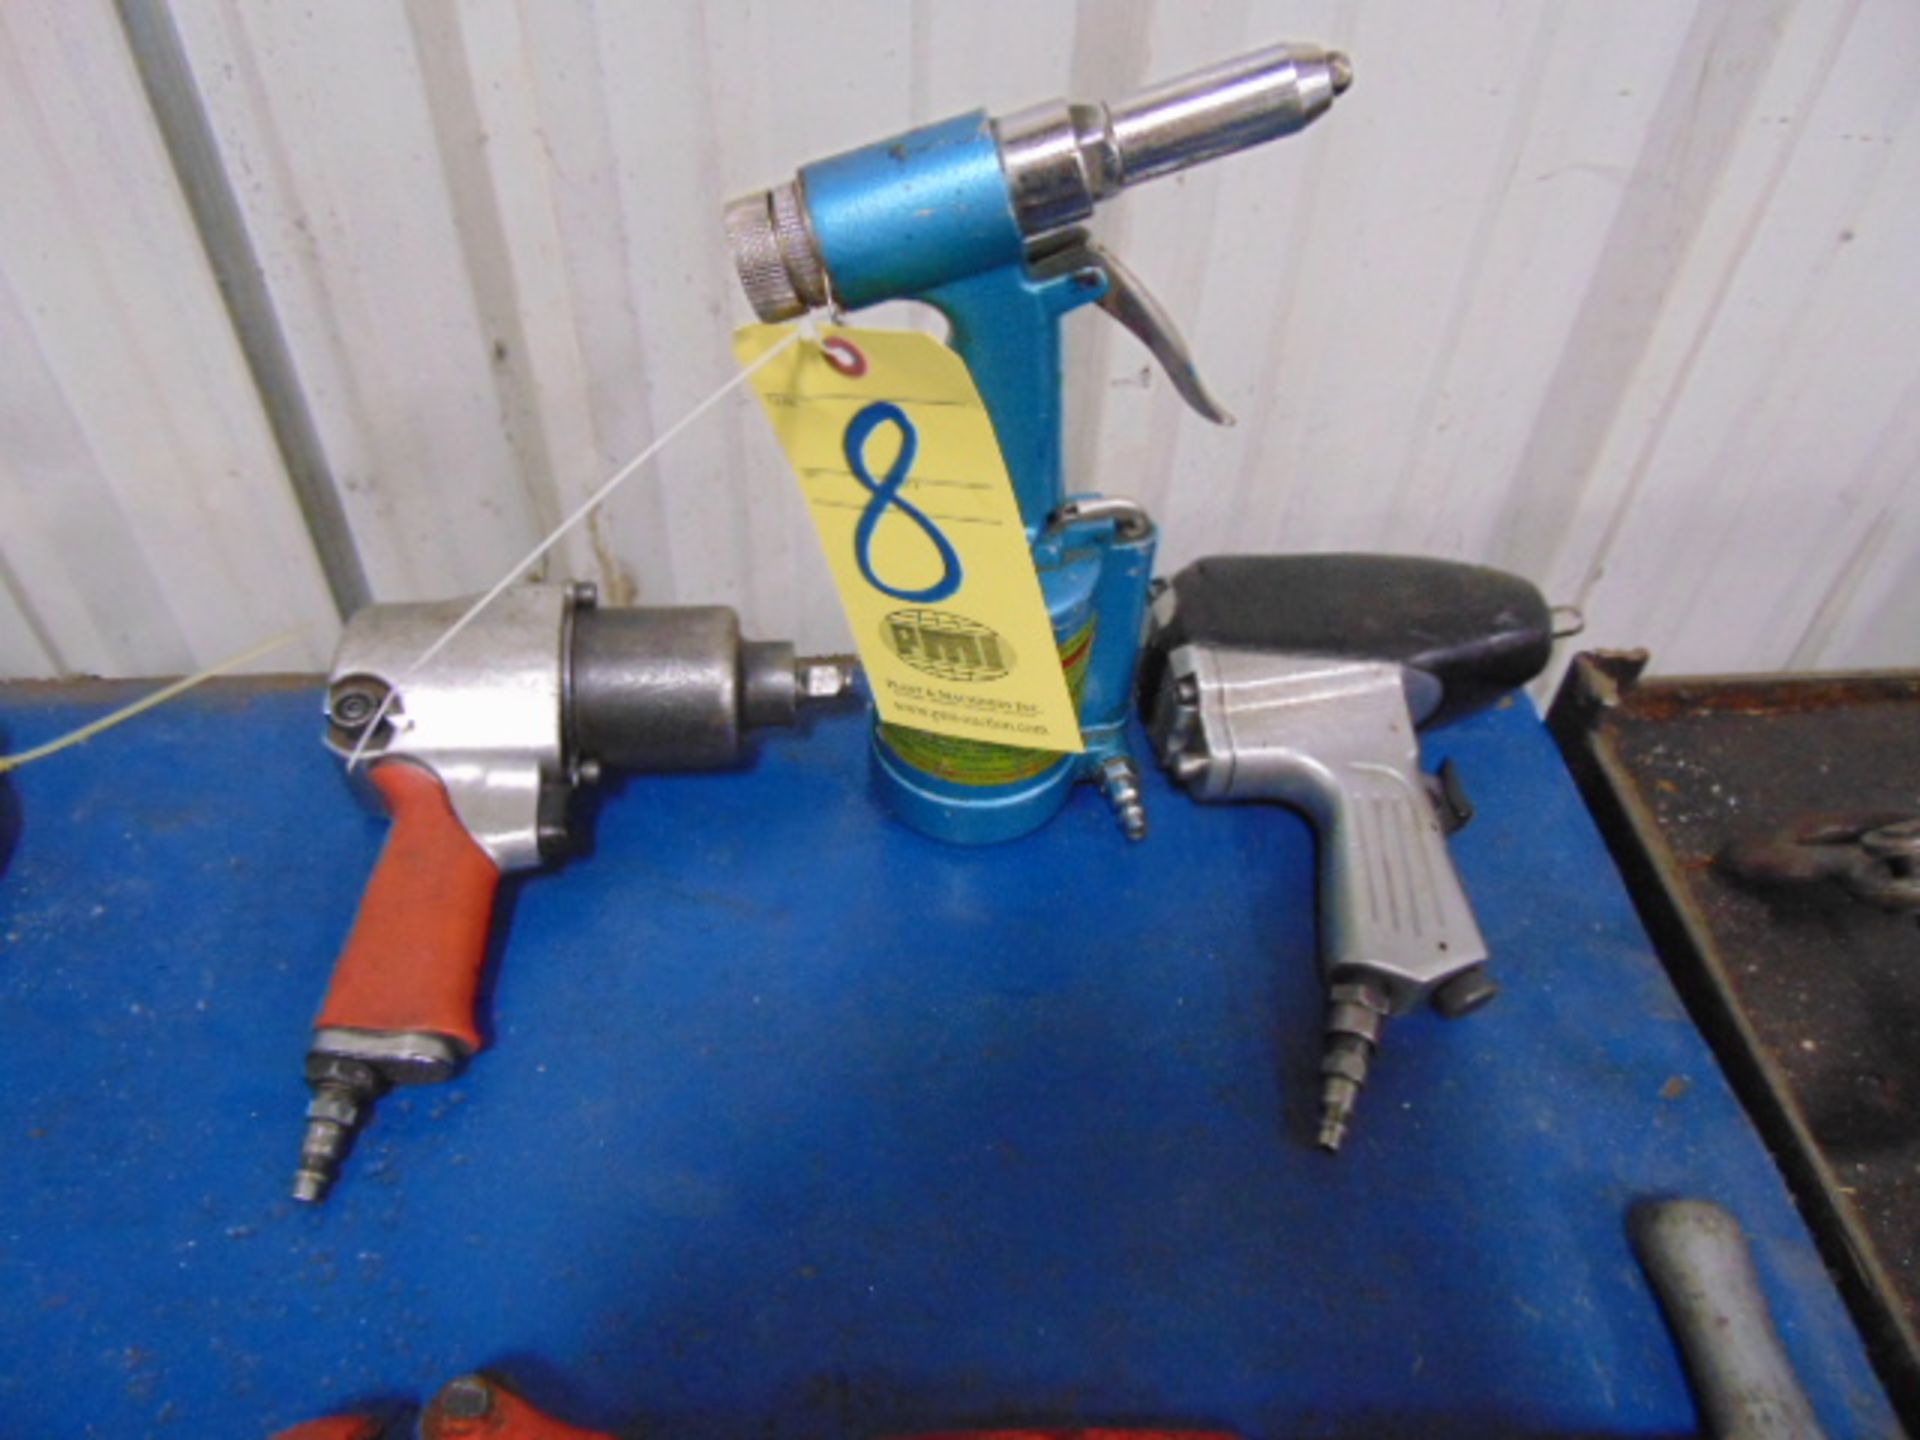 LOT CONSISTING OF: (2) 1/2" pneumatic impact wrenches & pneumatic rivet gun